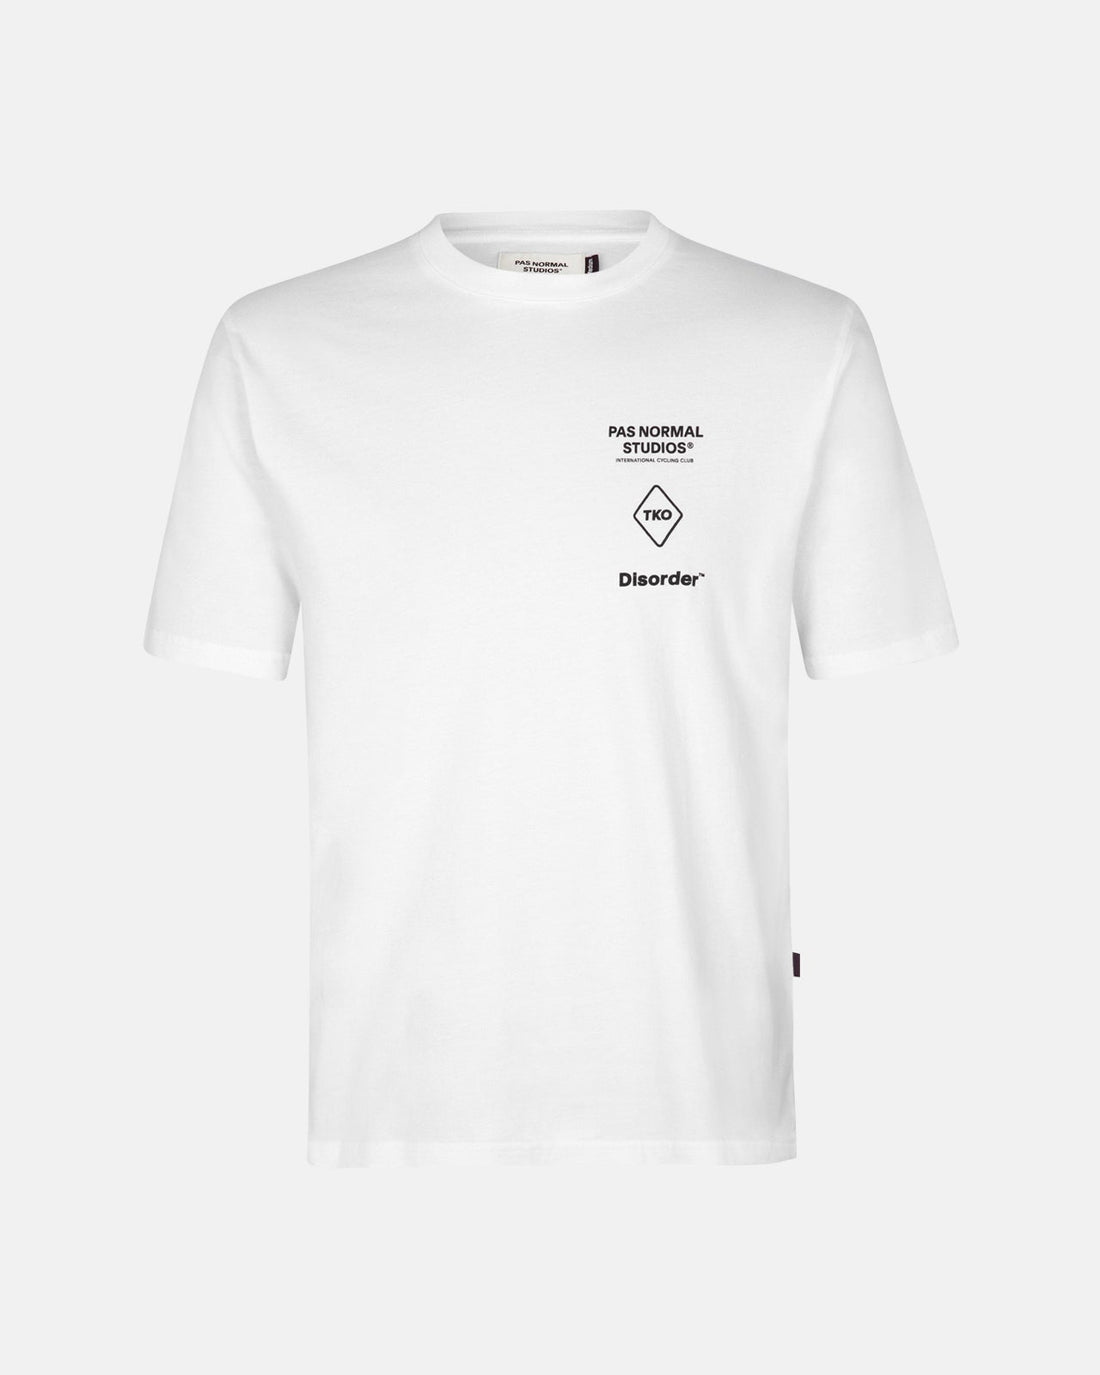 Off-Race T.K.O Disorder T-Shirt - White - Pas Normal Studios